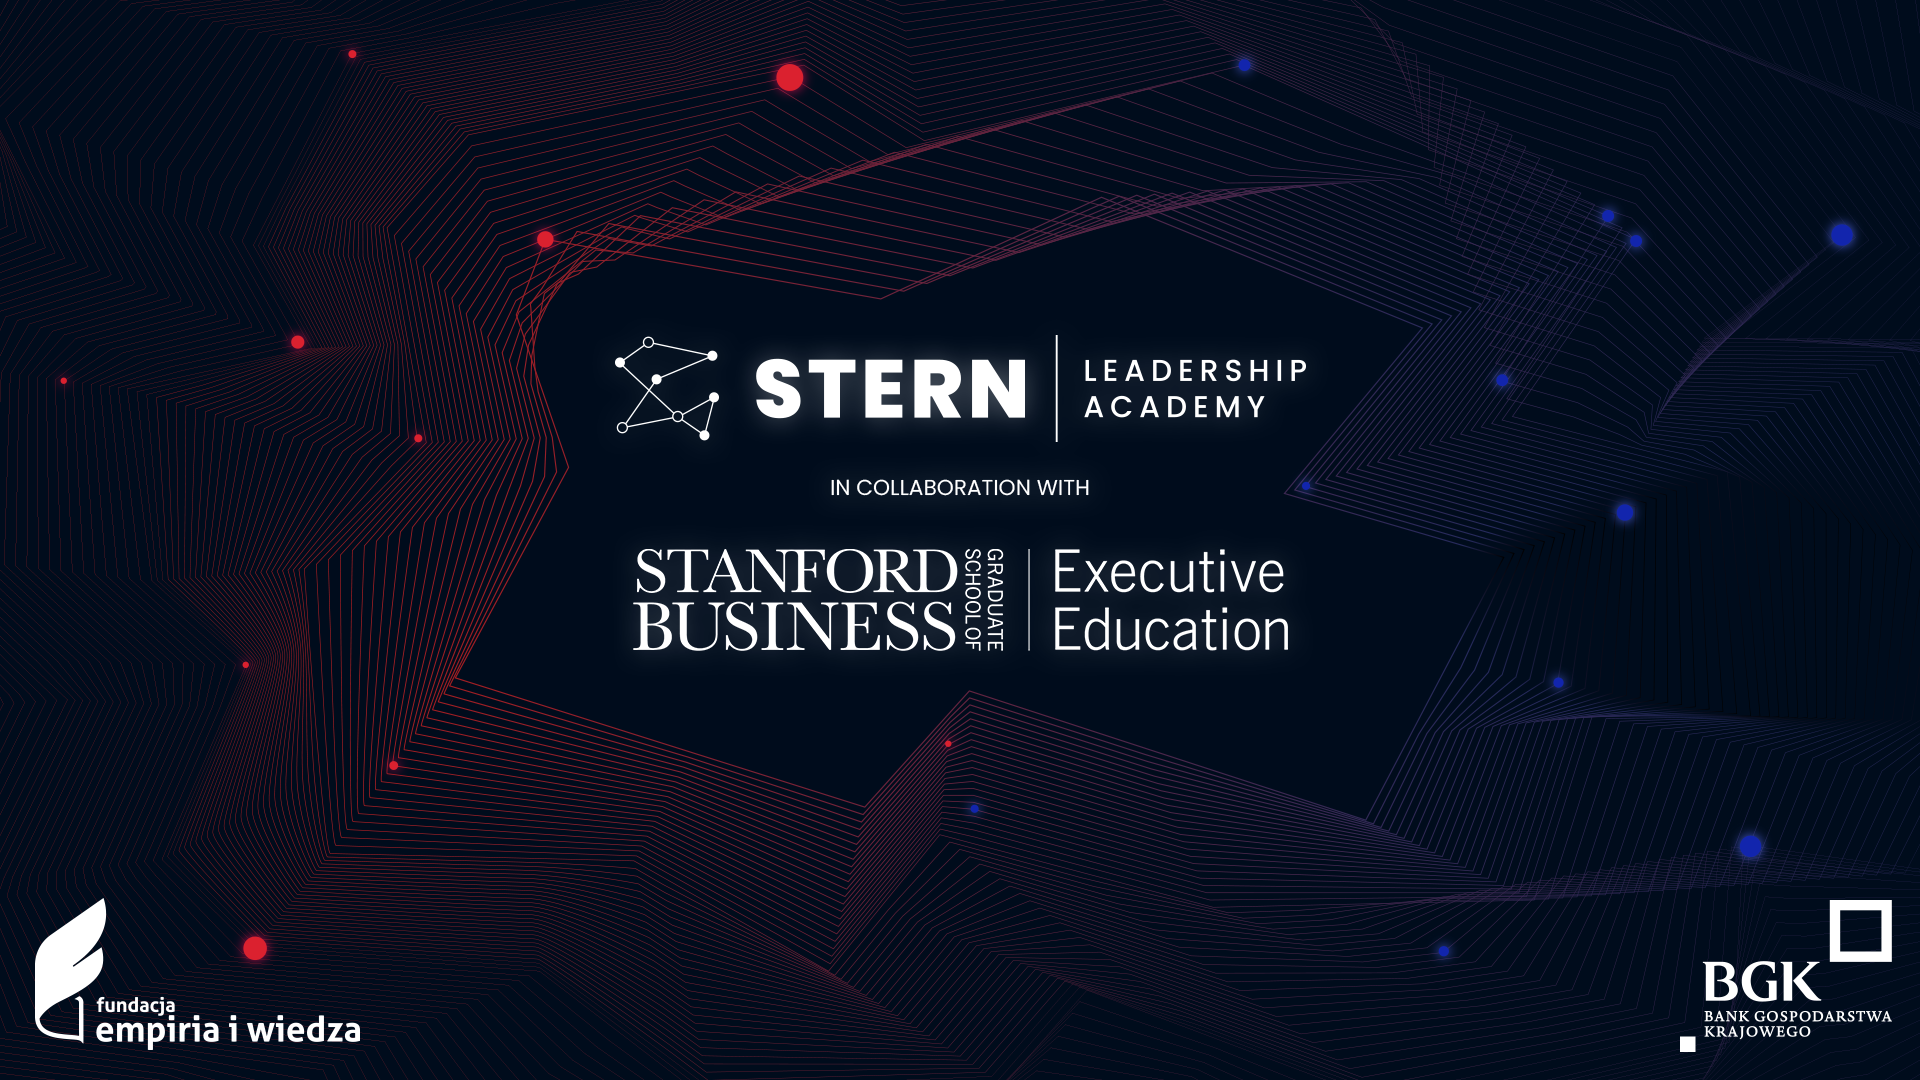 Stern Leadership Academy